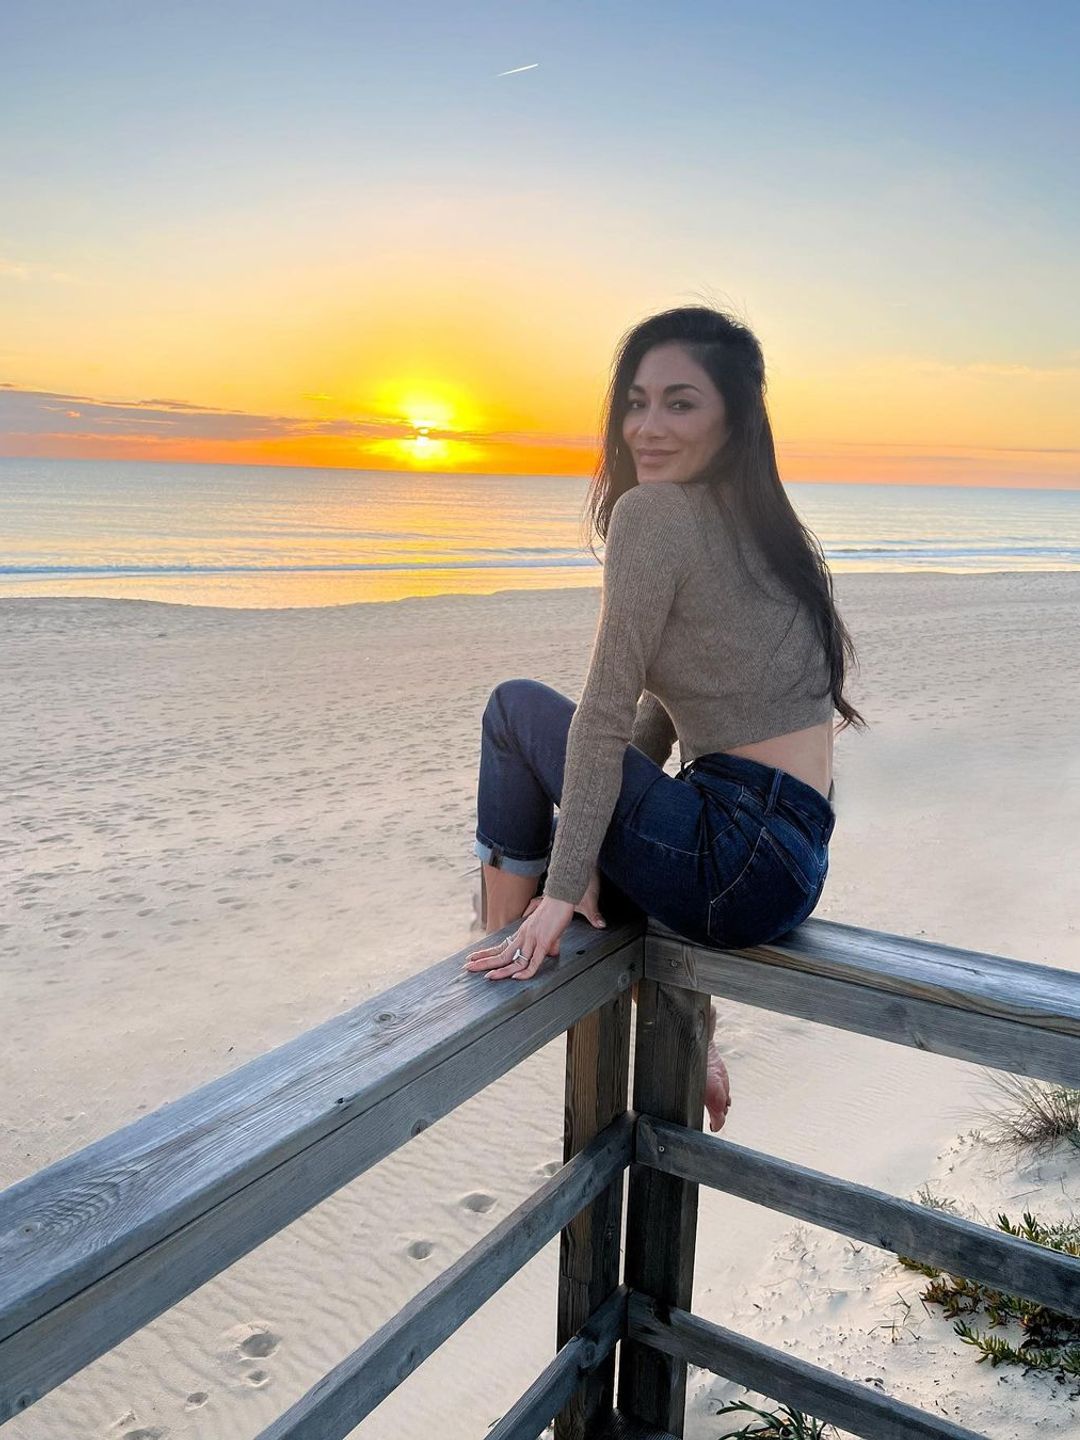 nicole scherzinger on beach with sunset 